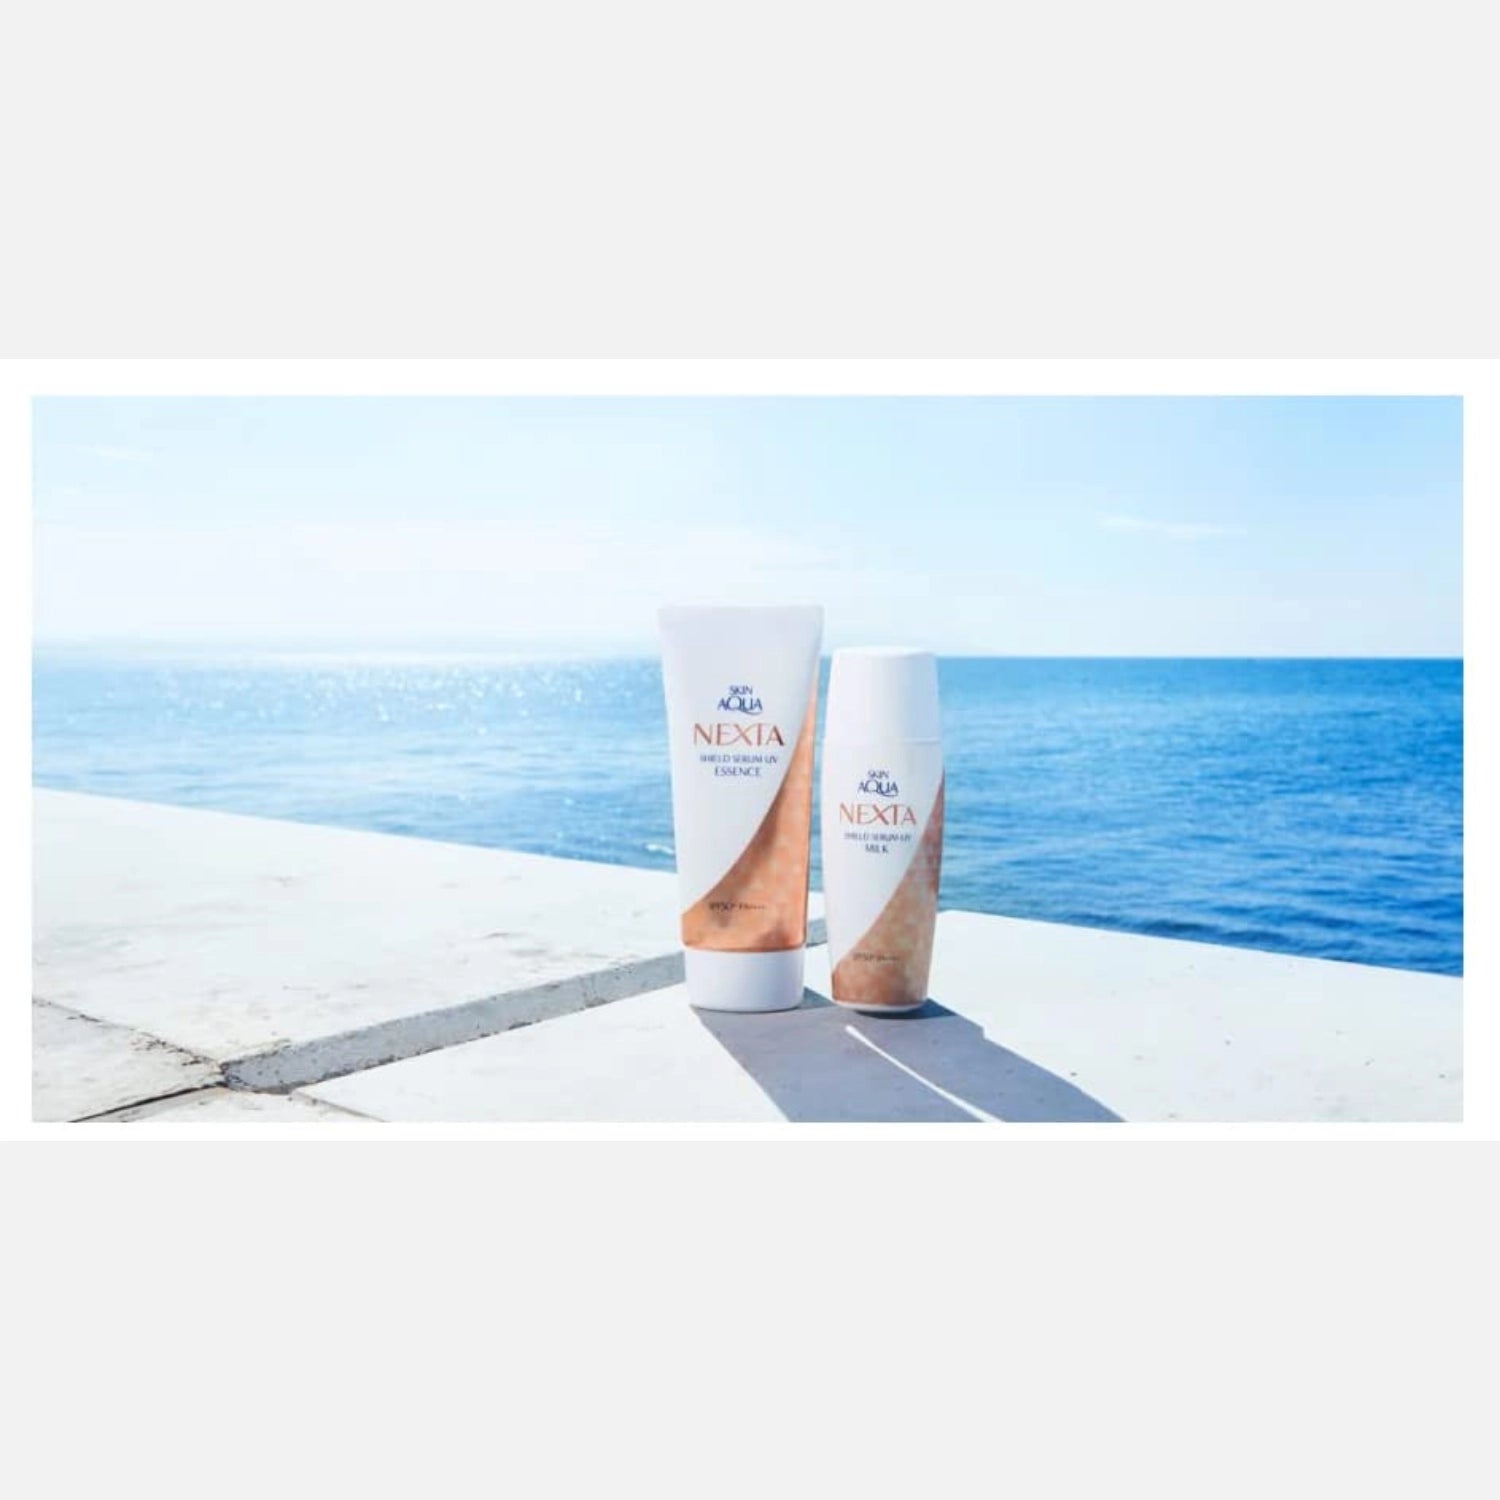 Skin Aqua Nexta Shield Serum UV Milk SPF 50+ PA++++ 50ml - Buy Me Japan